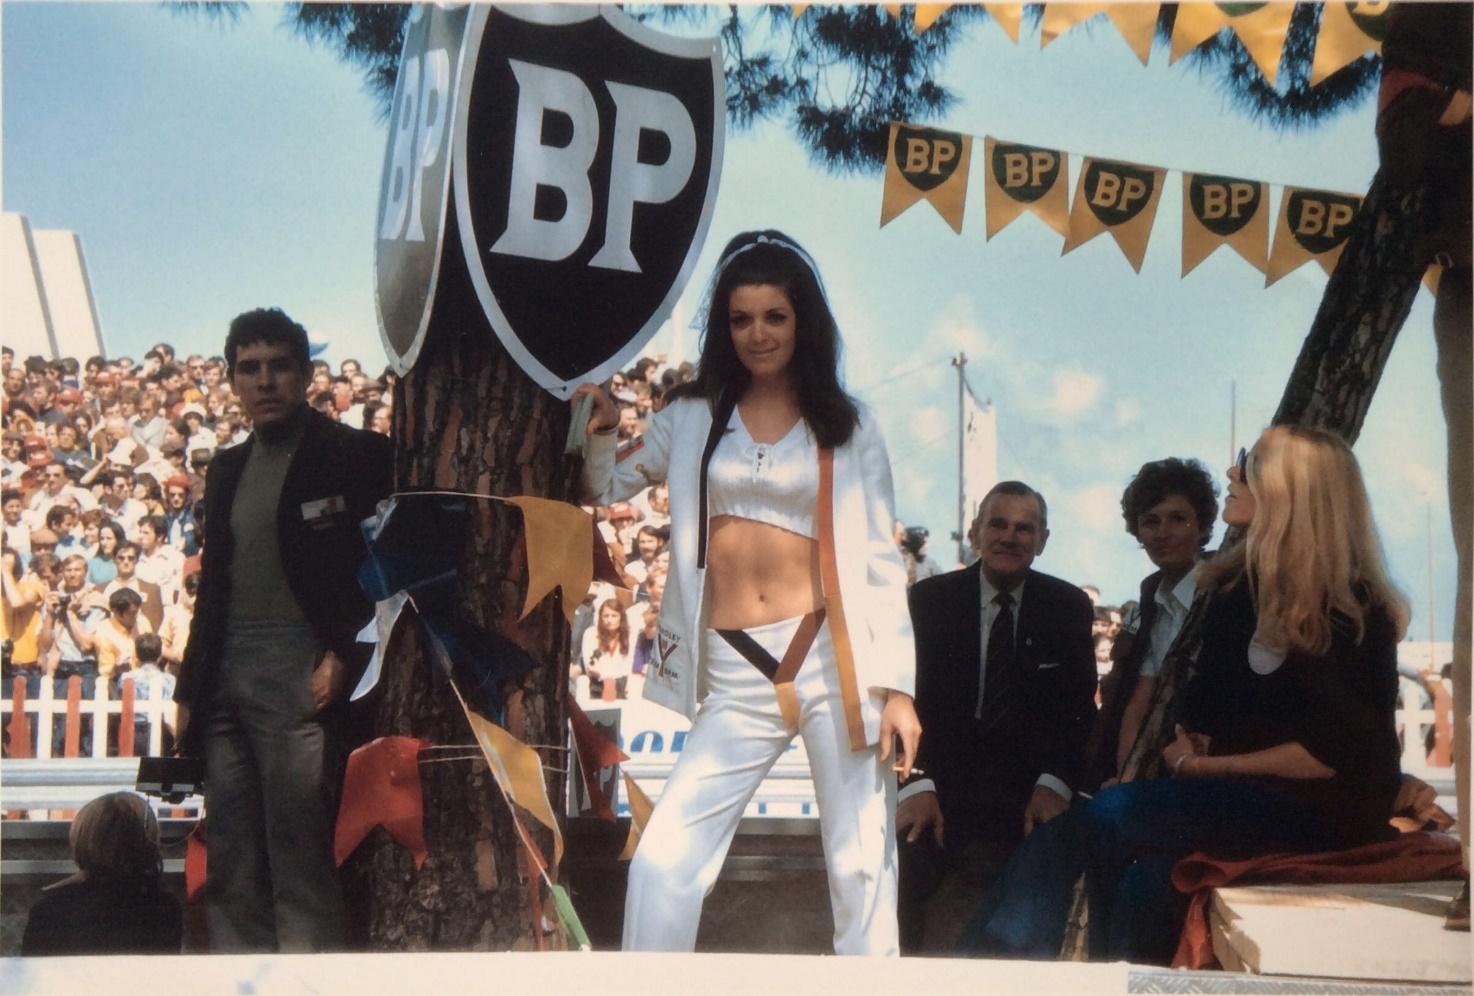 Monaco Grand Prix 1970, Lynne Oliver representing Yardley sponsorship for B.R.M.